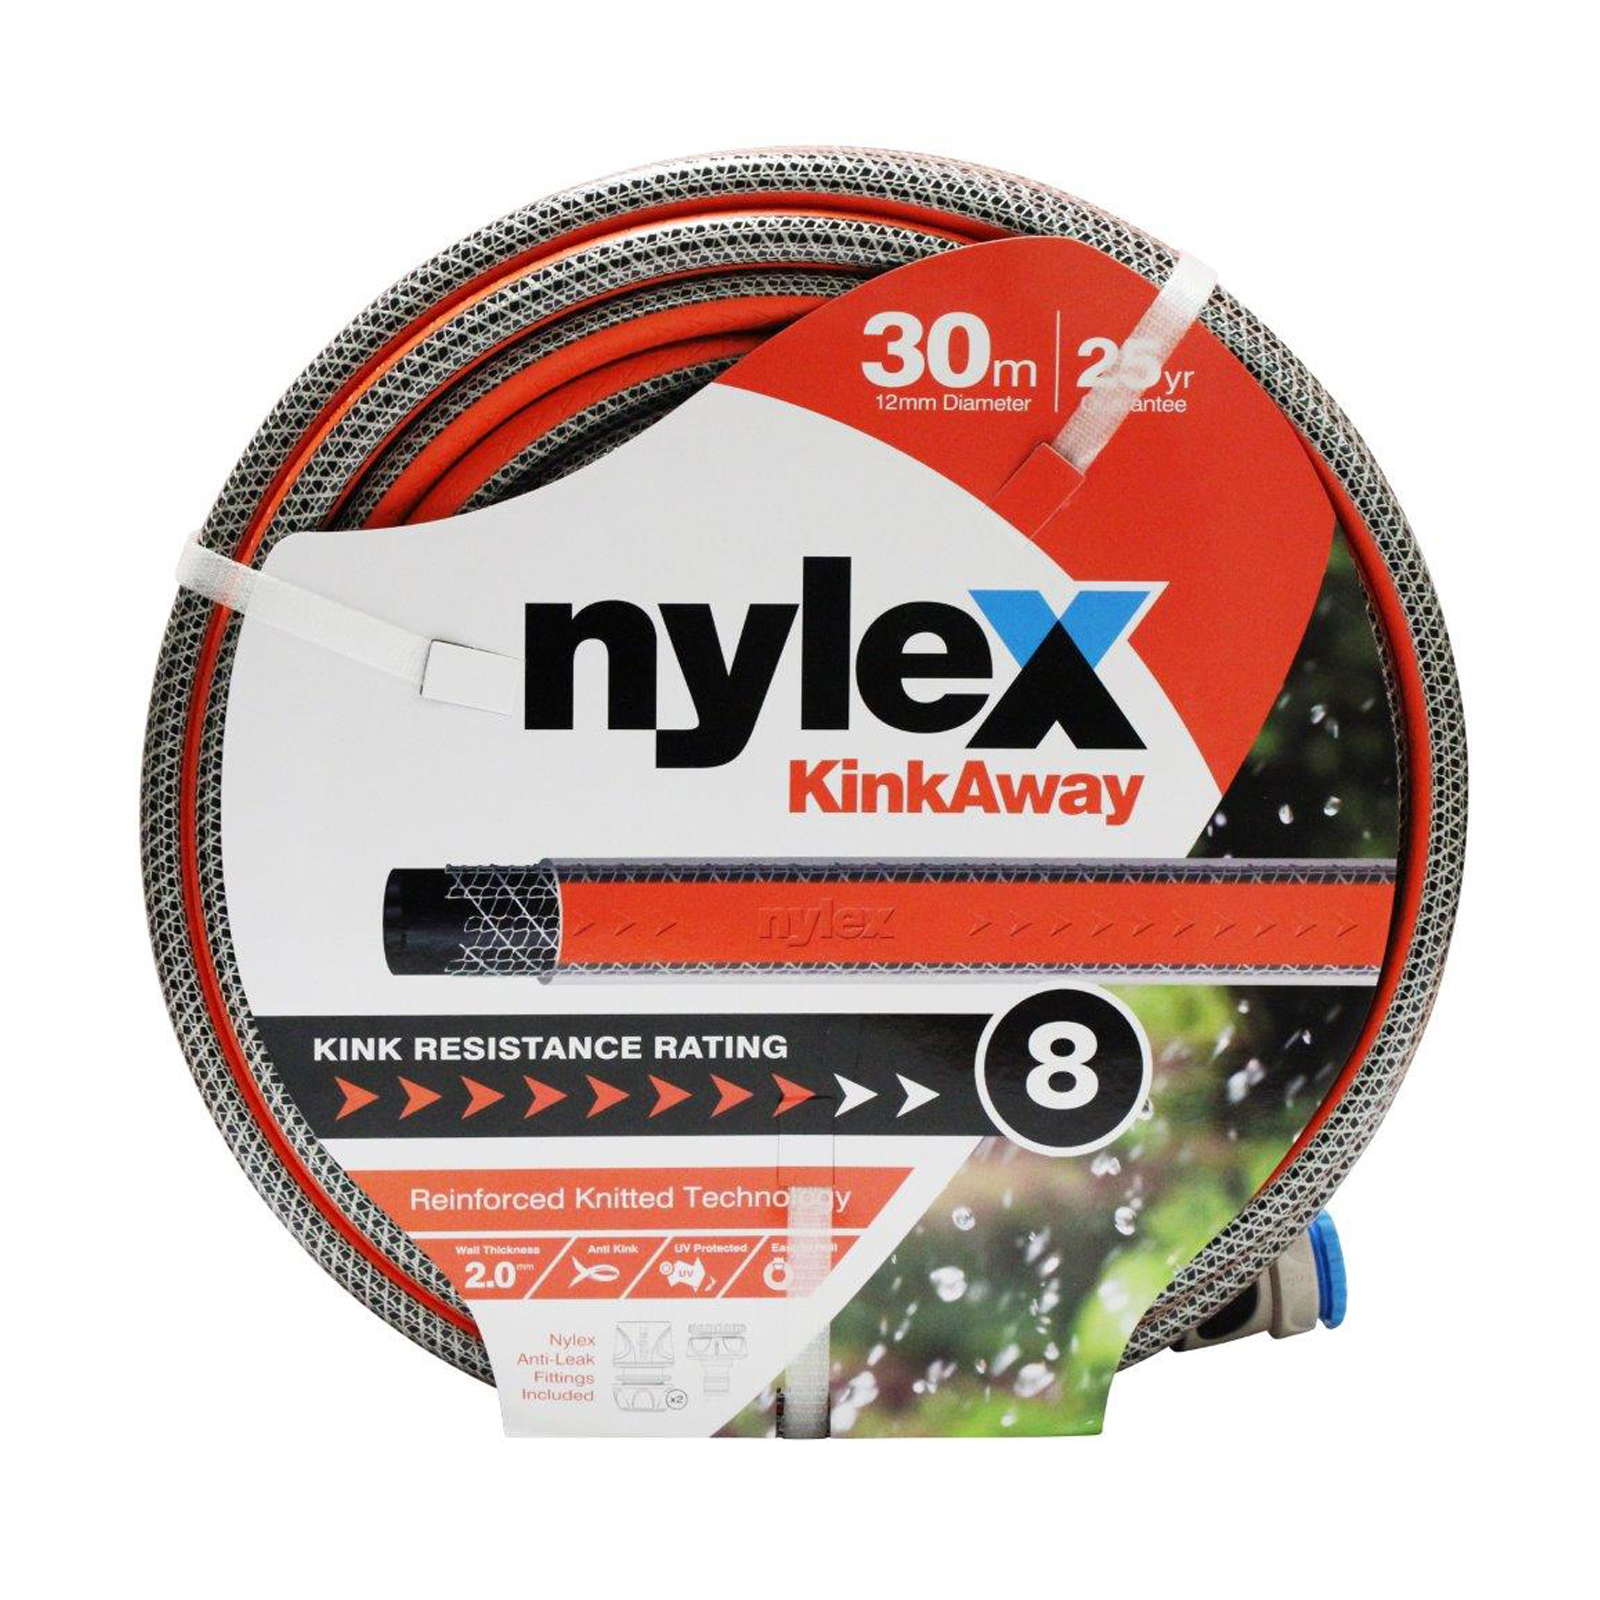 Nylex 12mm x 30m Kinkaway Garden Hose